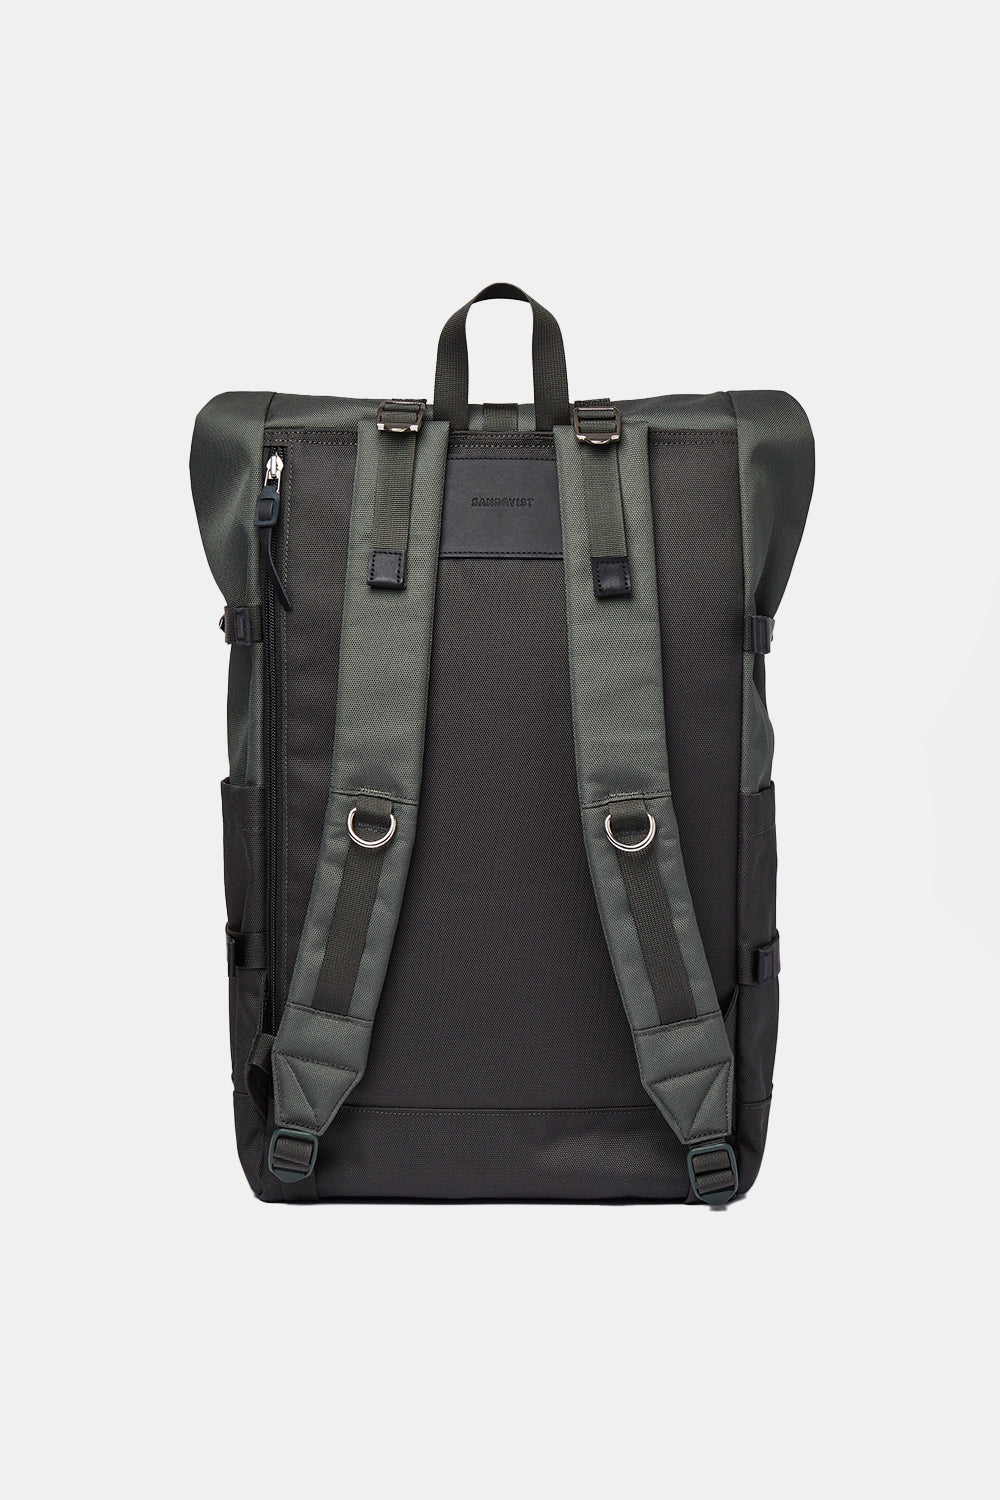 Sandqvist Bernt Backpack (Multi Green / Black) | Number Six